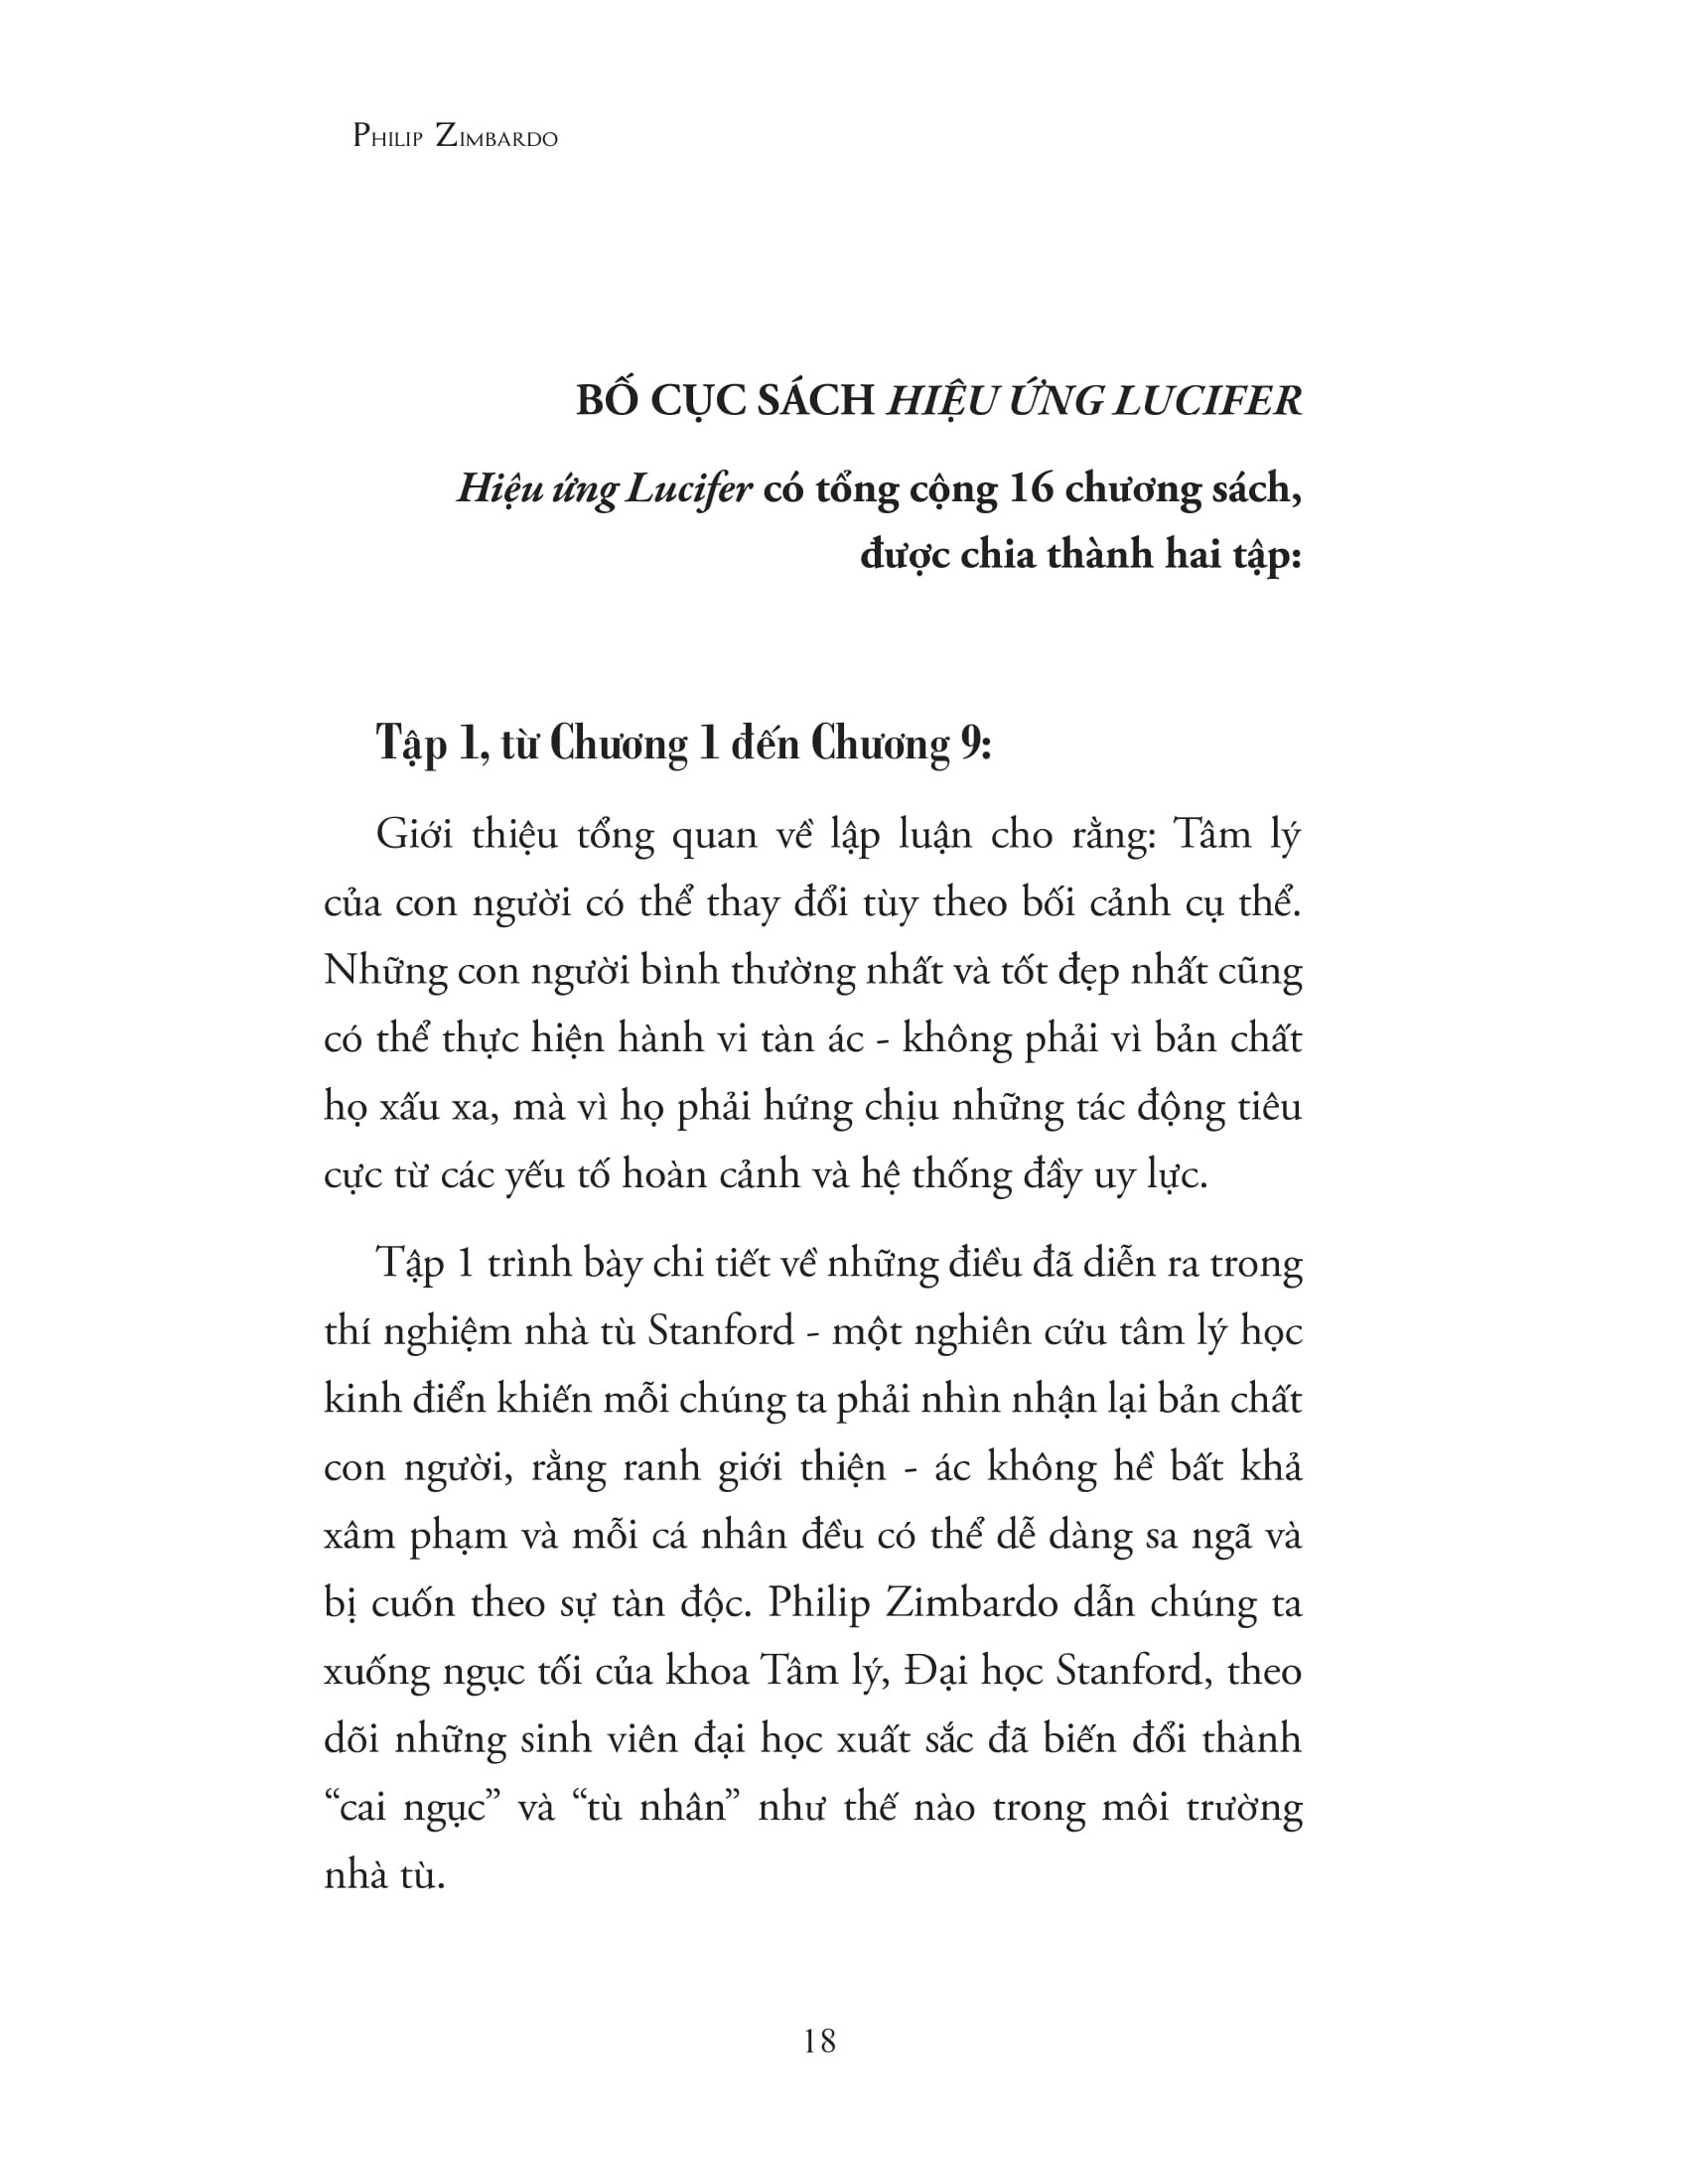 Hiệu Ứng Lucifer - Tập 1 PDF